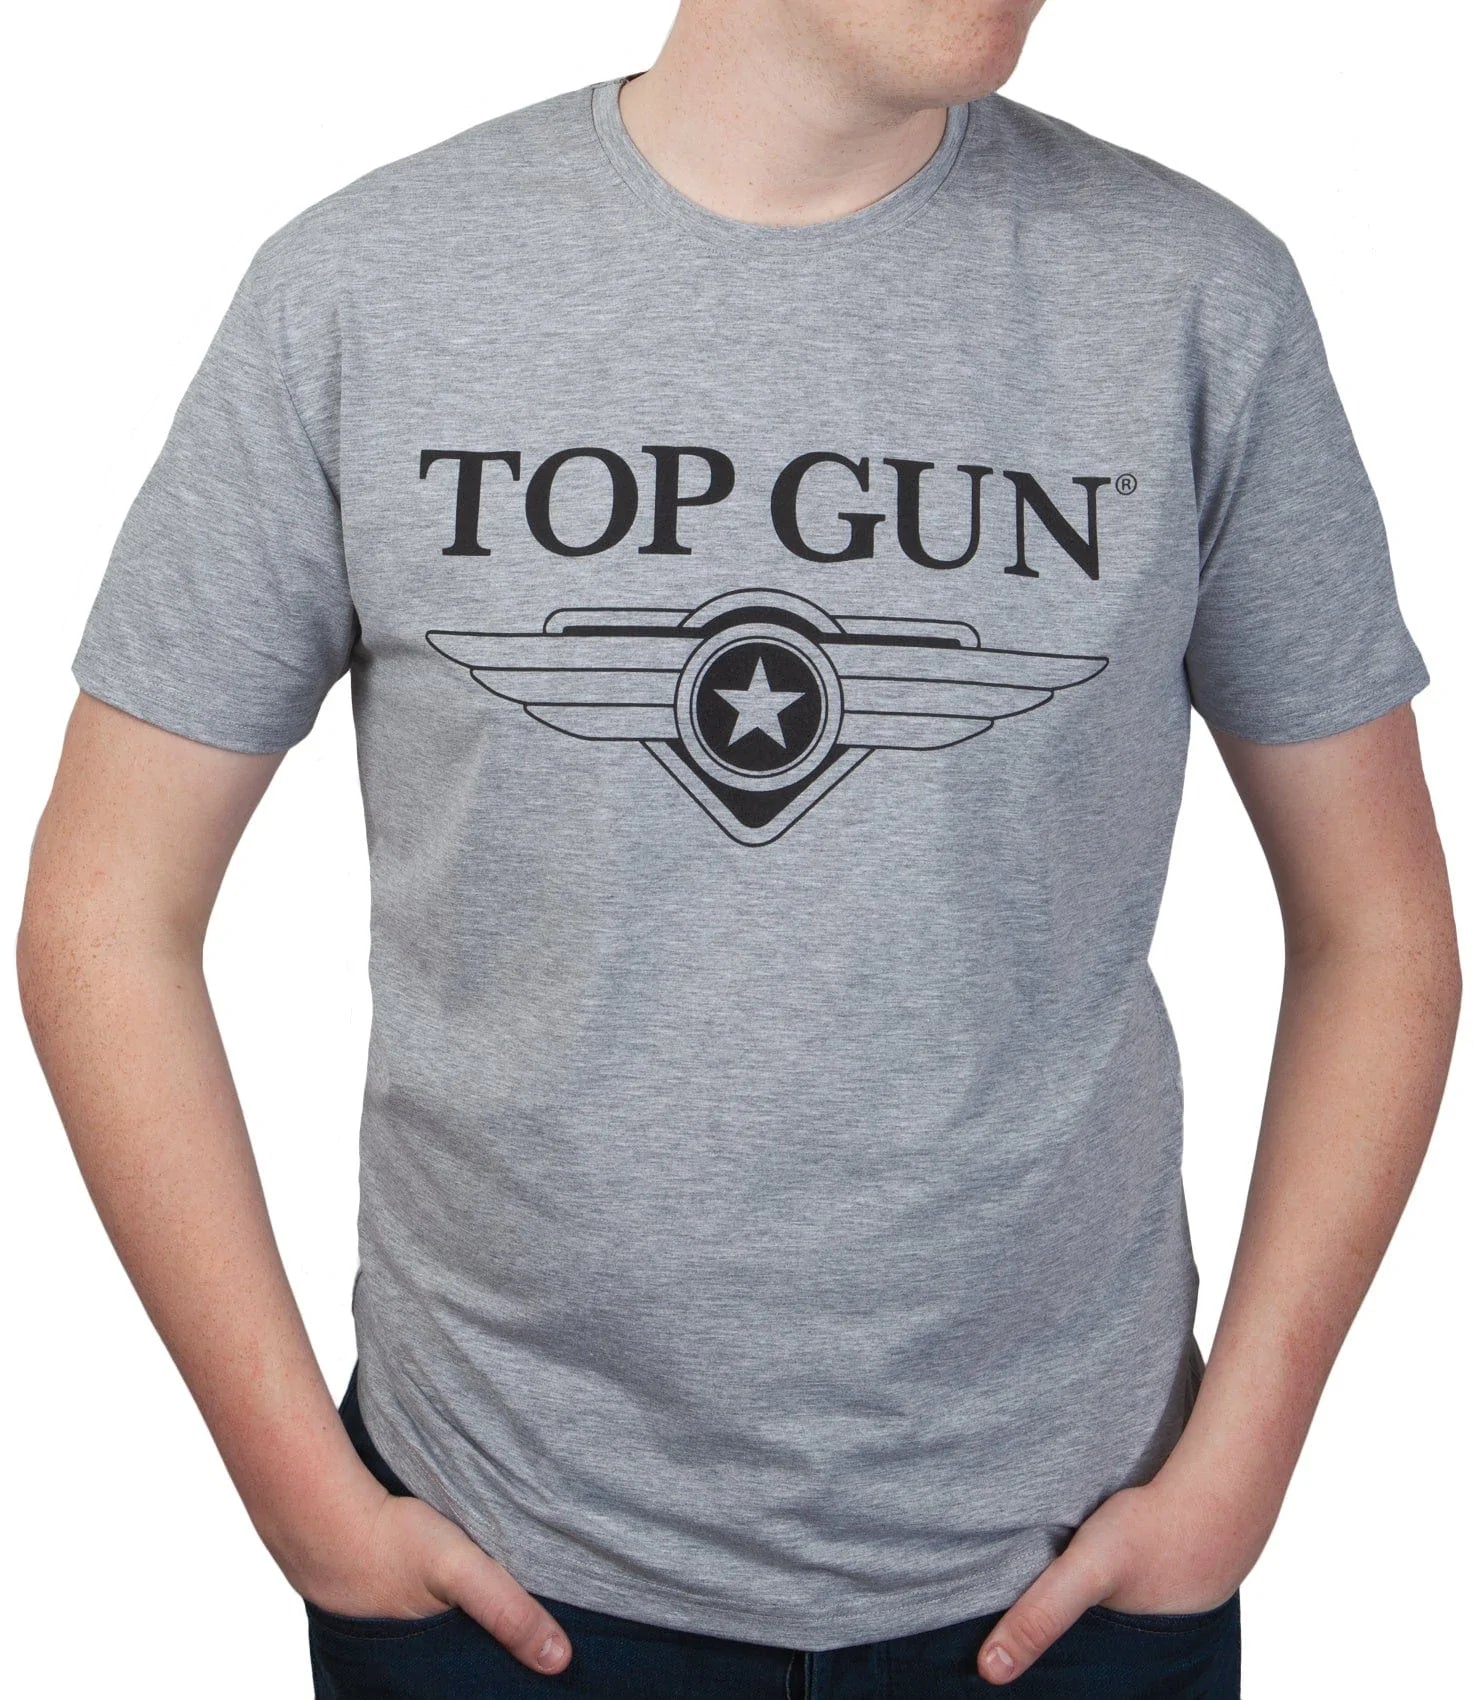 Top Gun"Cloudy" T-shirt, grey